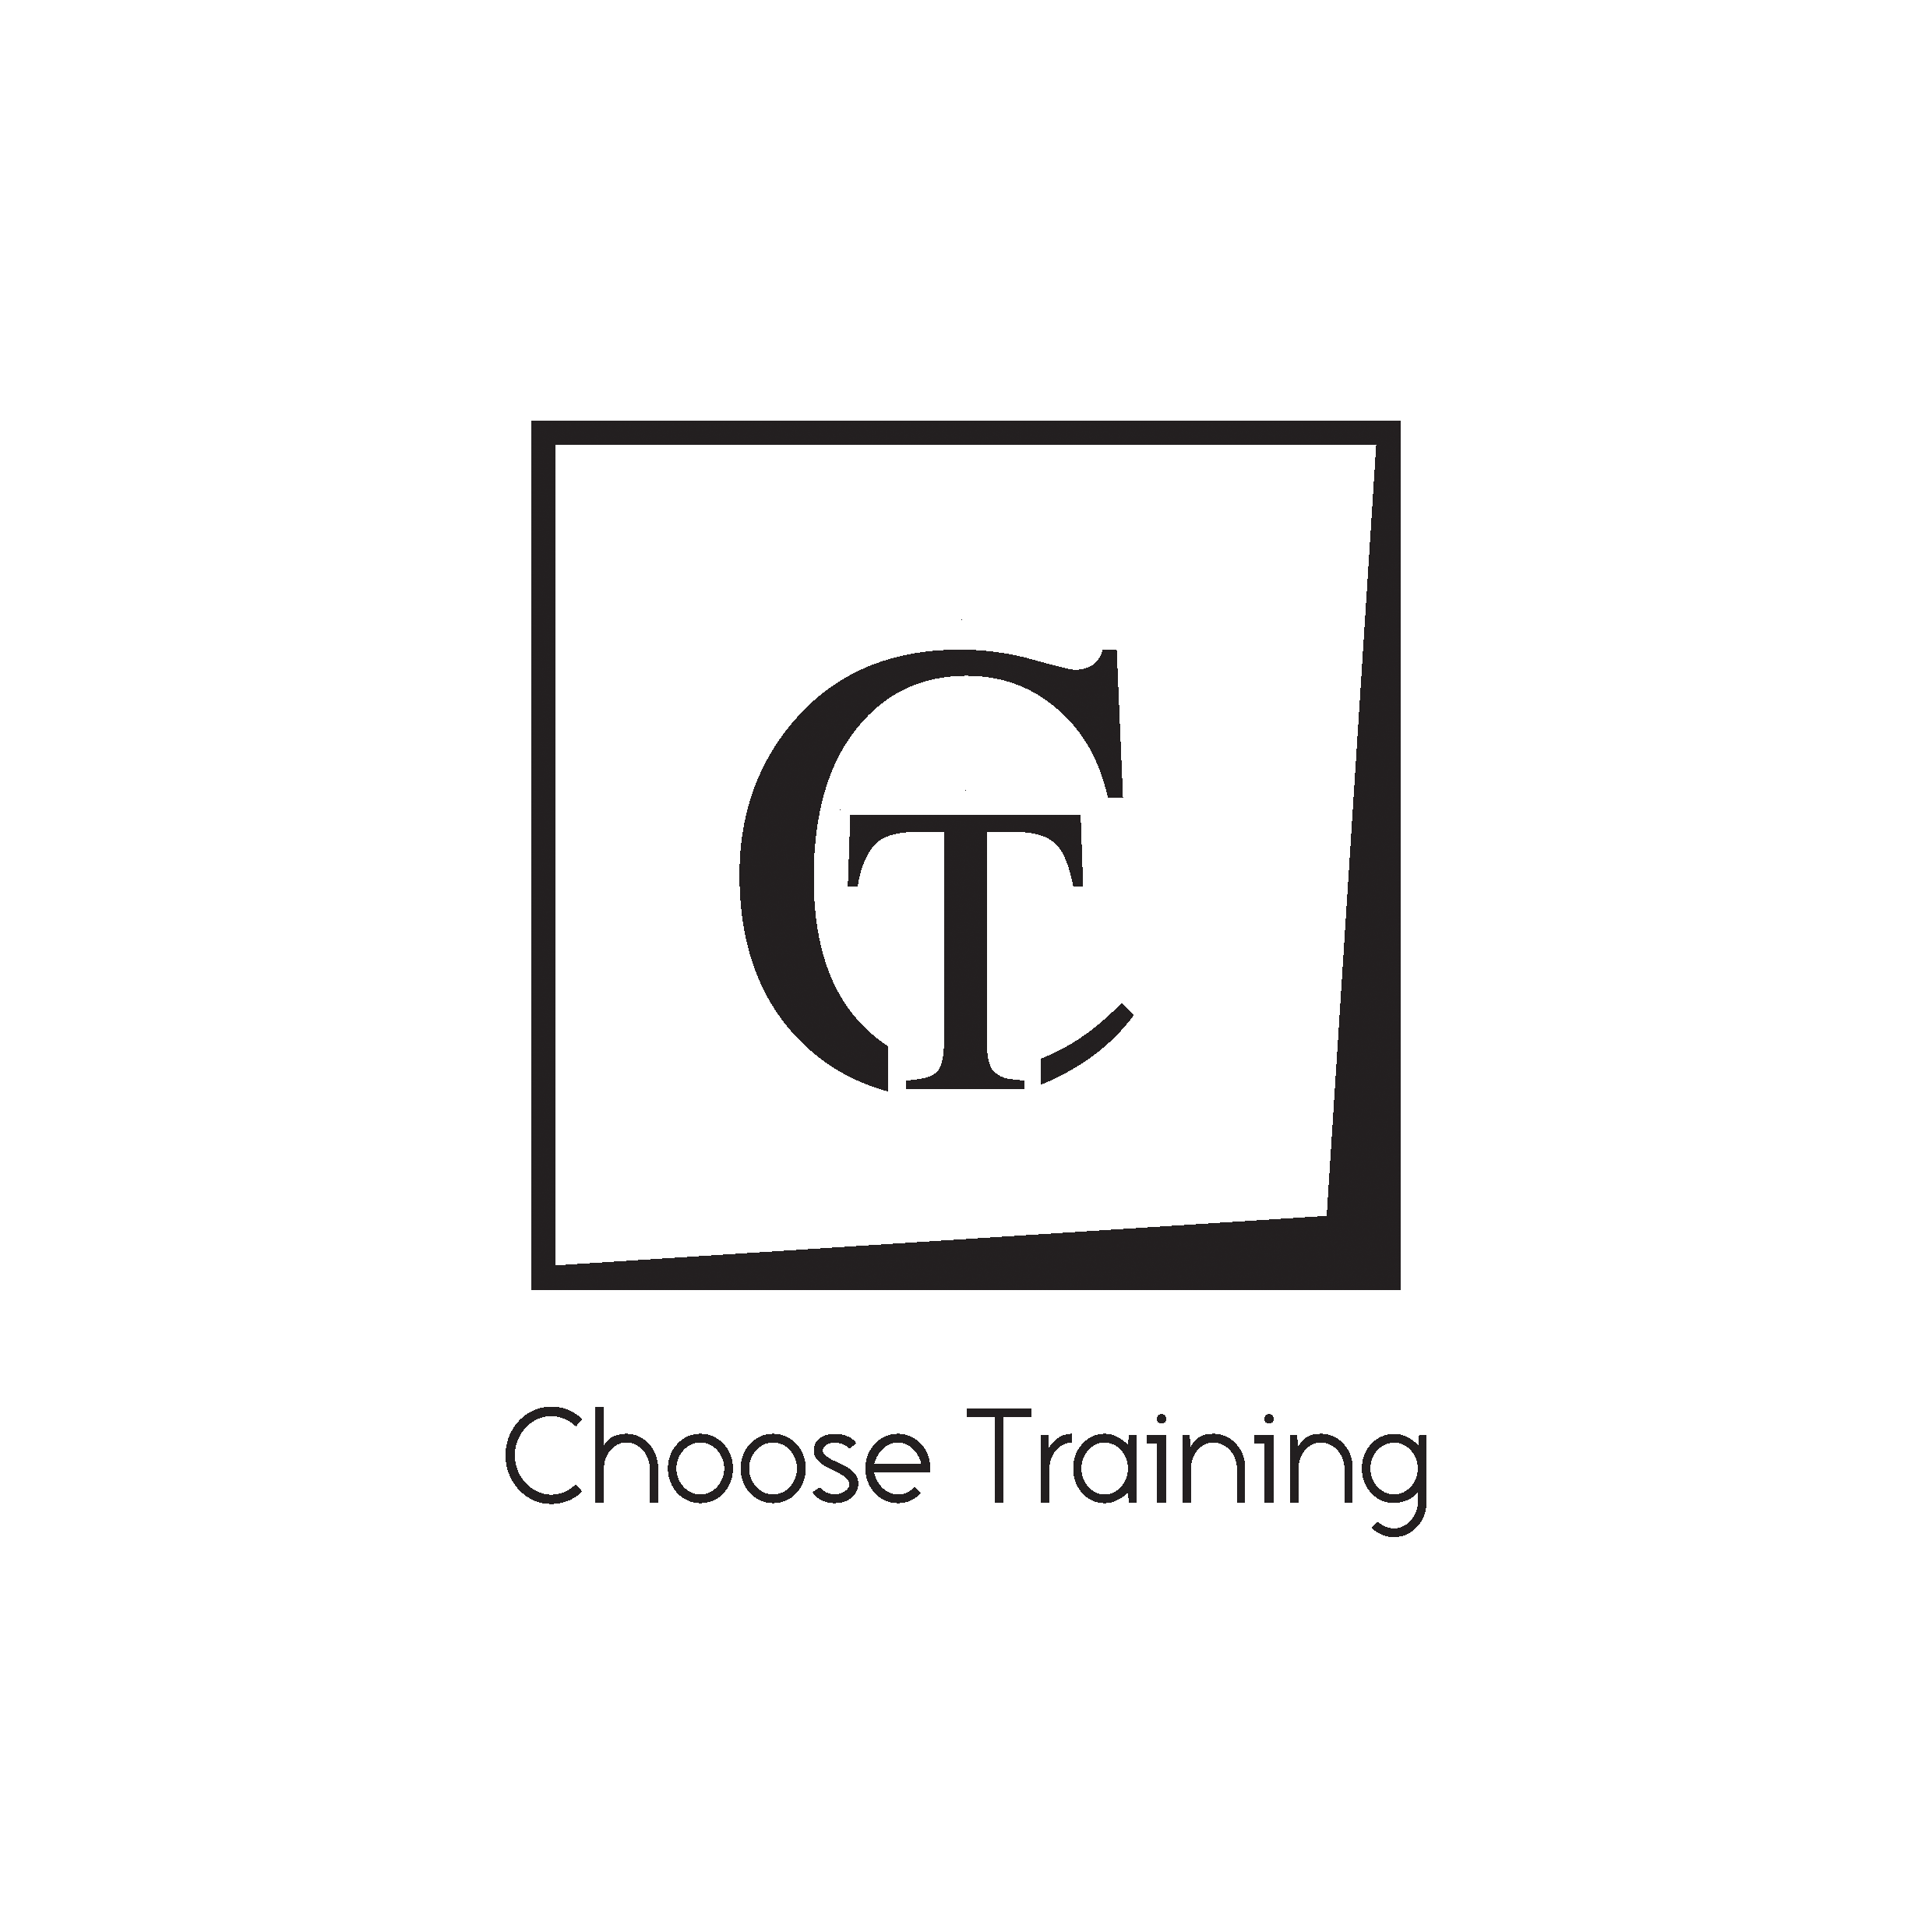 Choose training